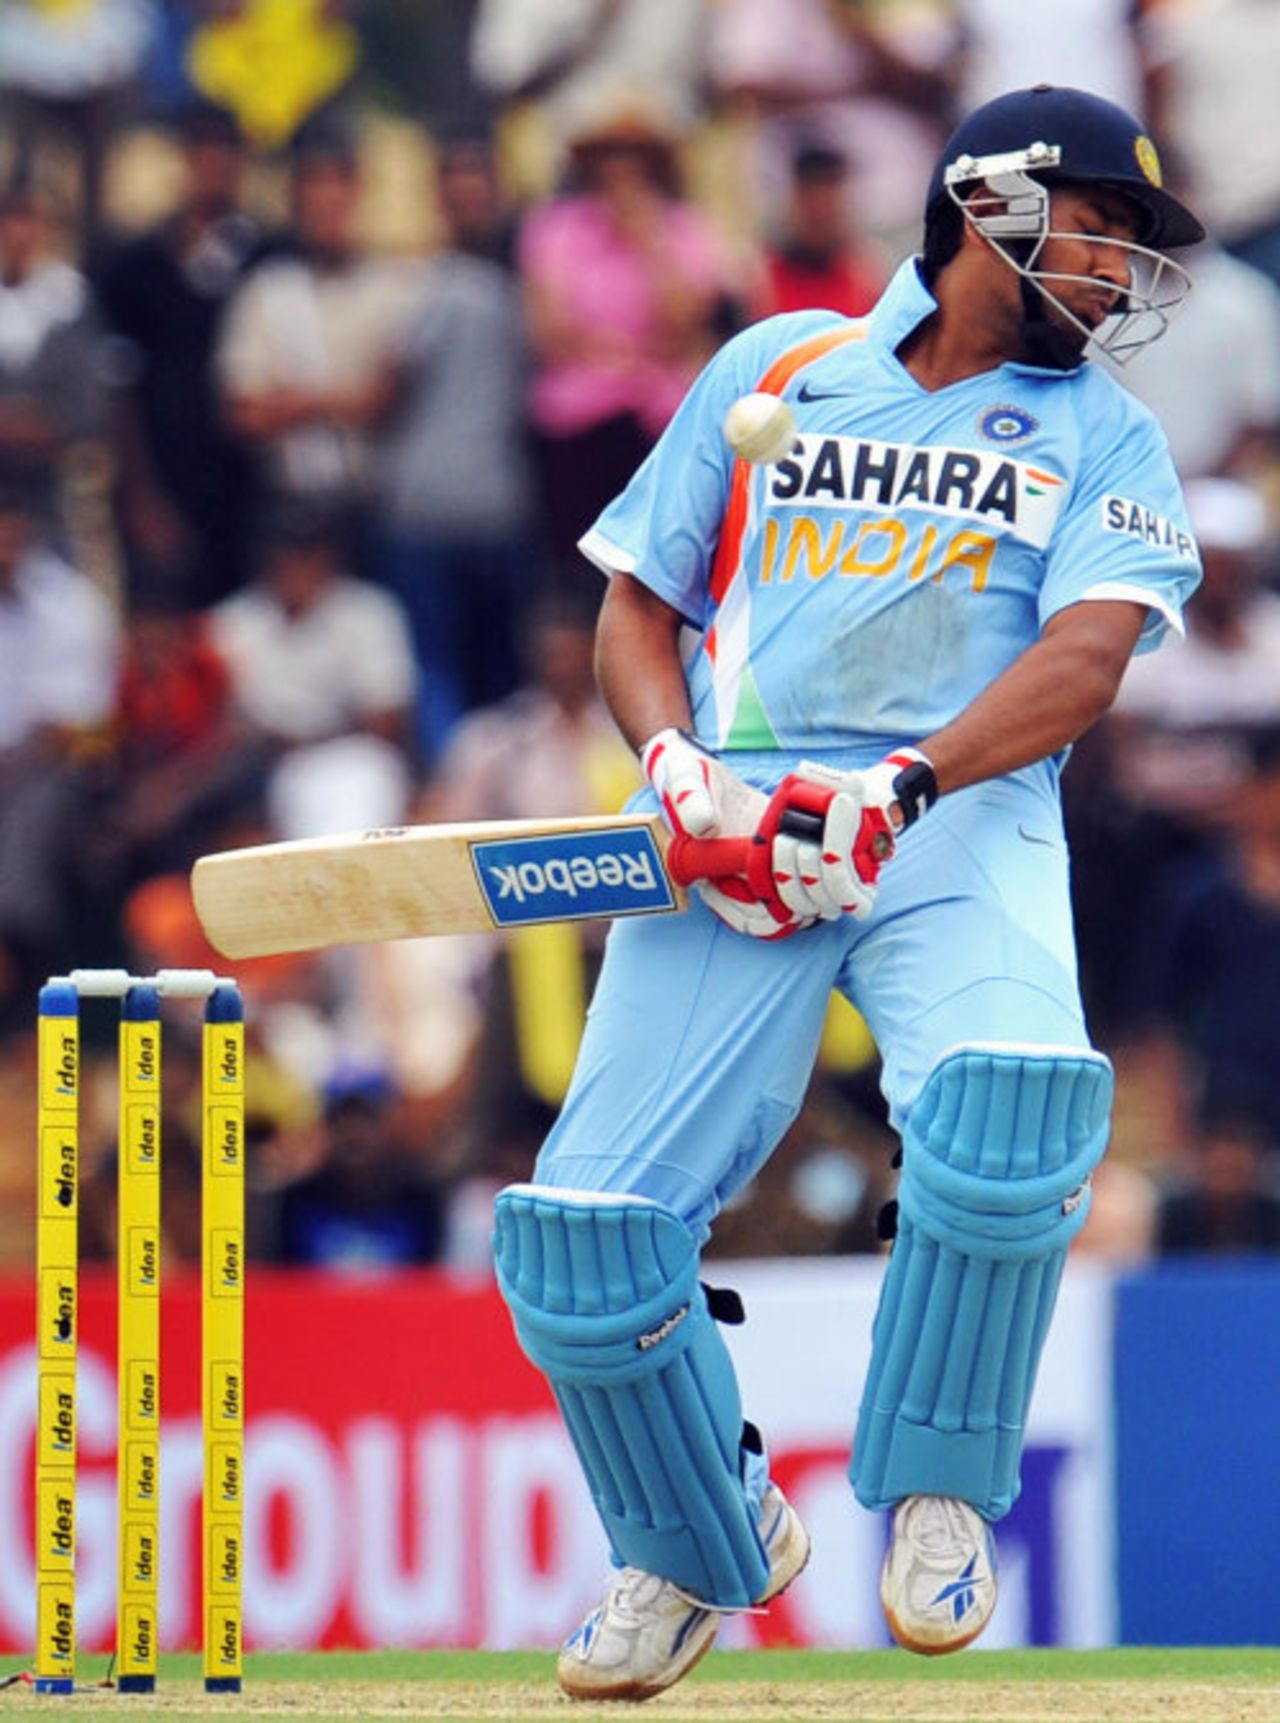 Rohit Sharma sways away from a bouncer, Sri Lanka v India, 1st ODI, Dambulla, August 18, 2008 